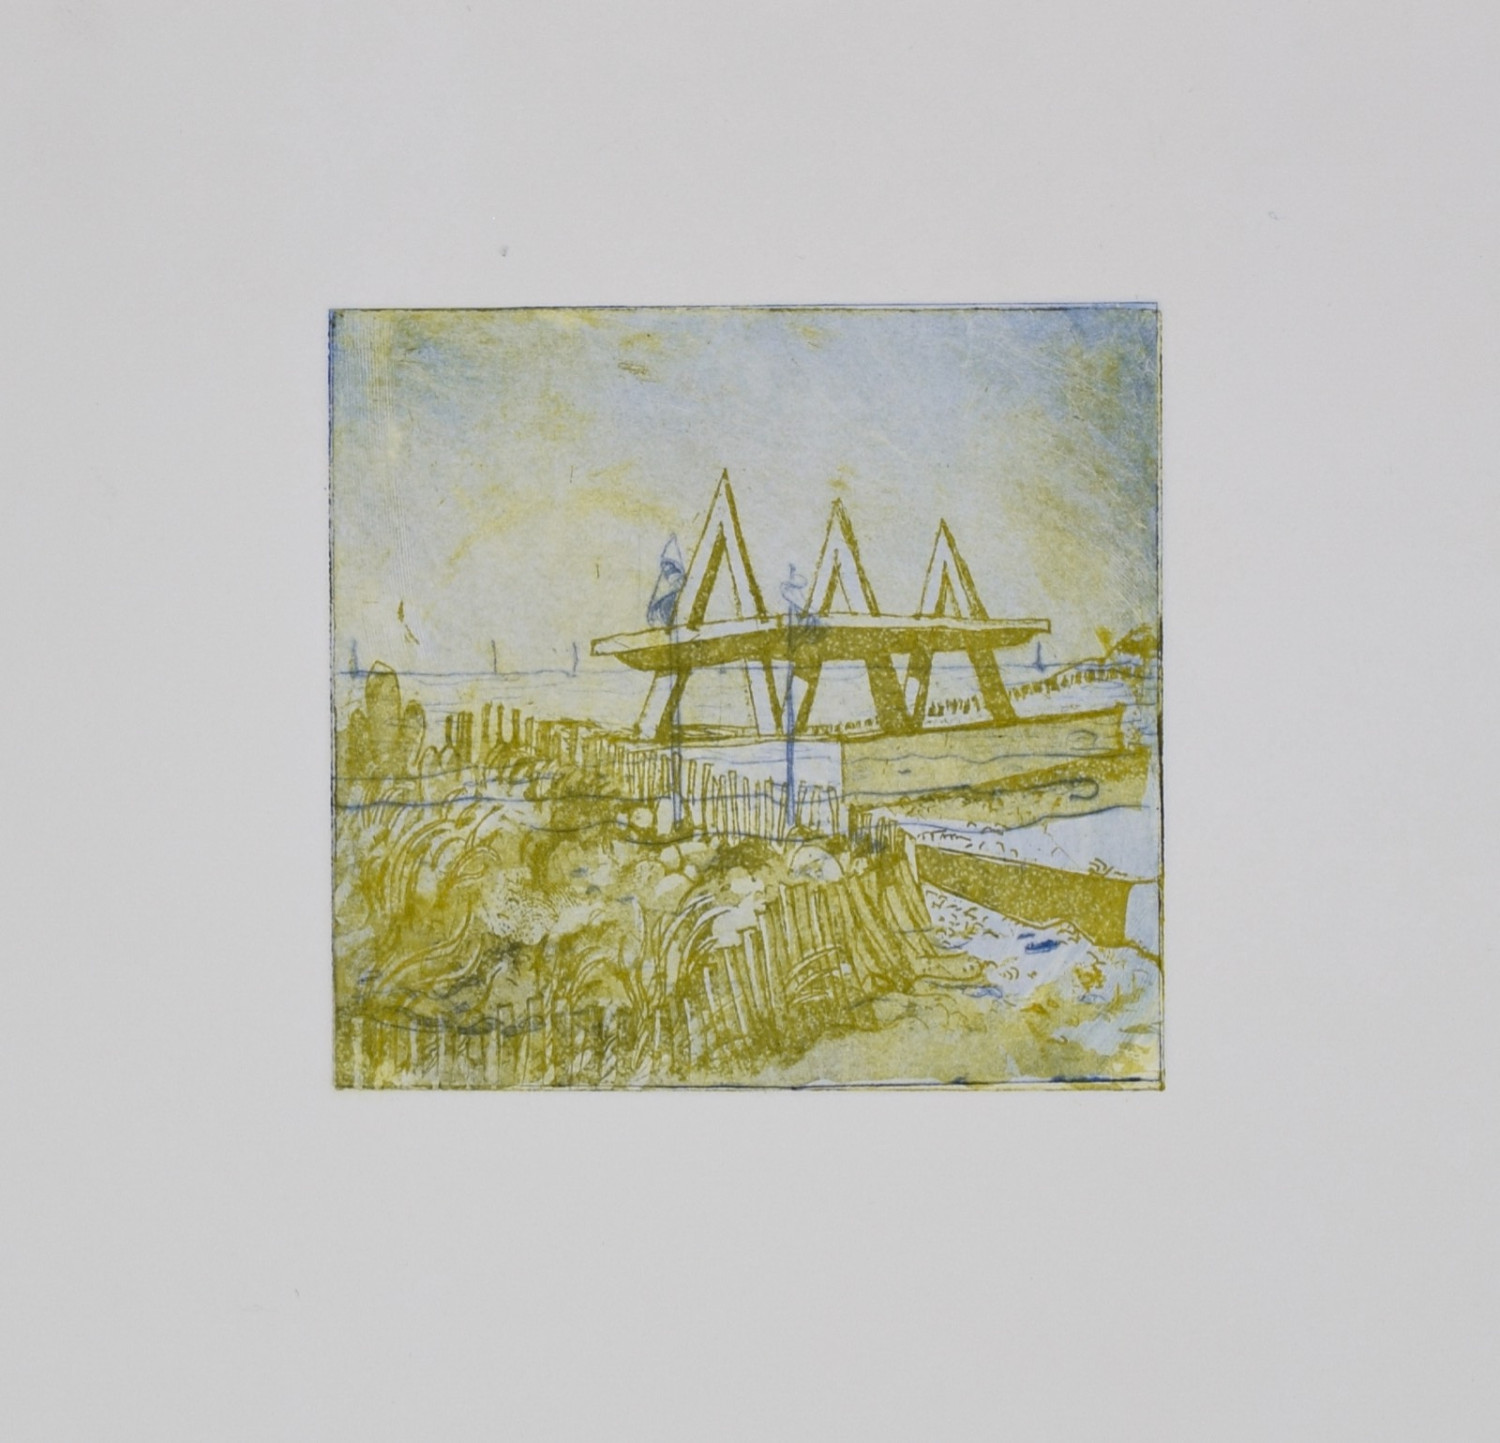 *Memories of Dunes & Tide*, multi-process print (drypoint and aquatint), 10 x 10cm